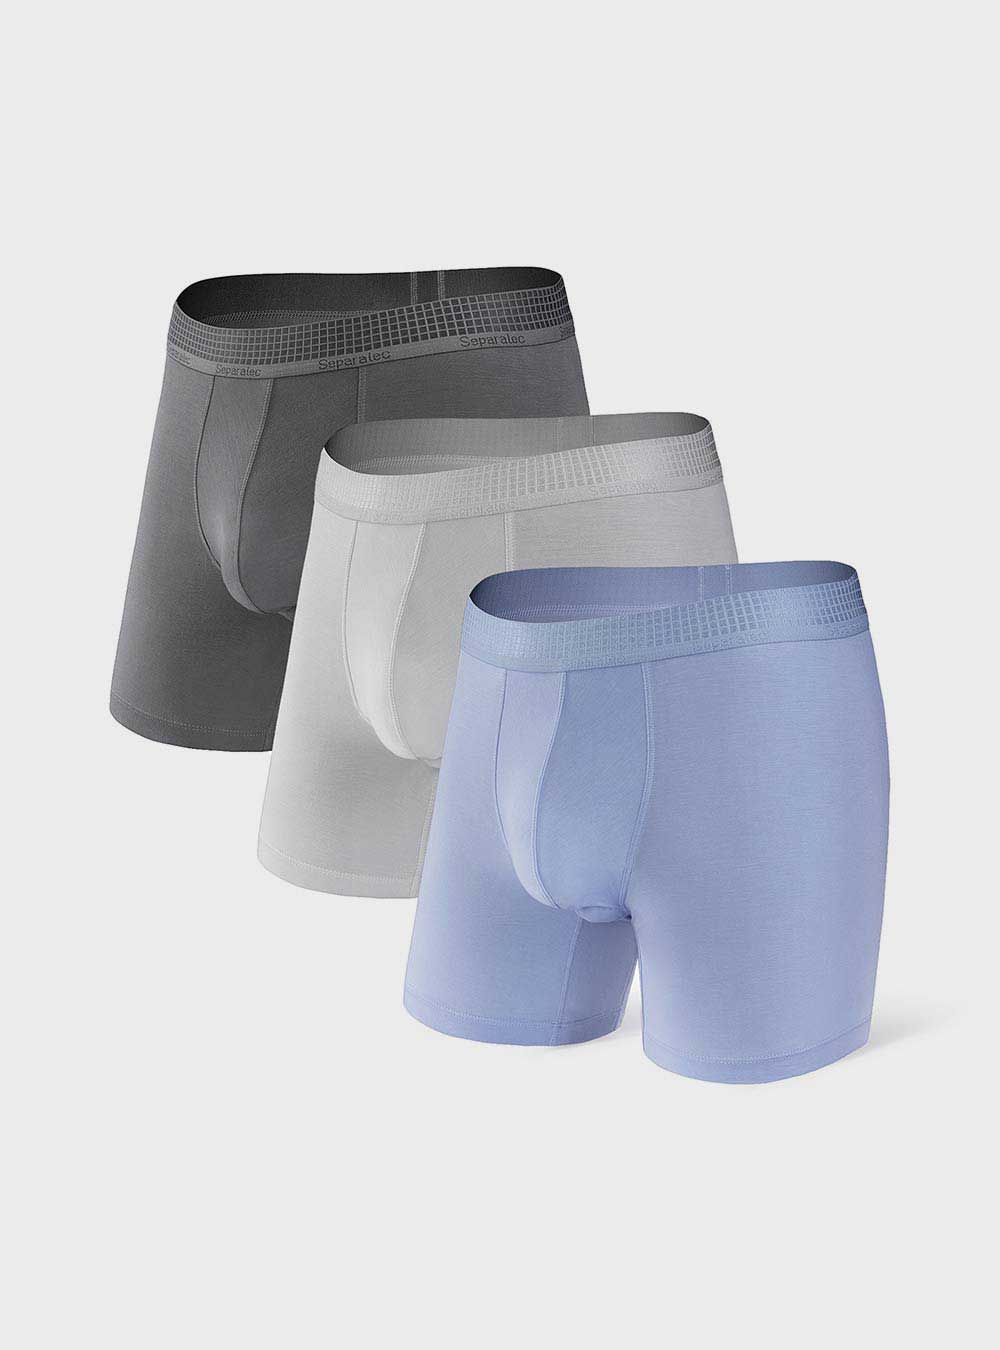 Molasus Men's Underwear Soft Modal Microfiber India